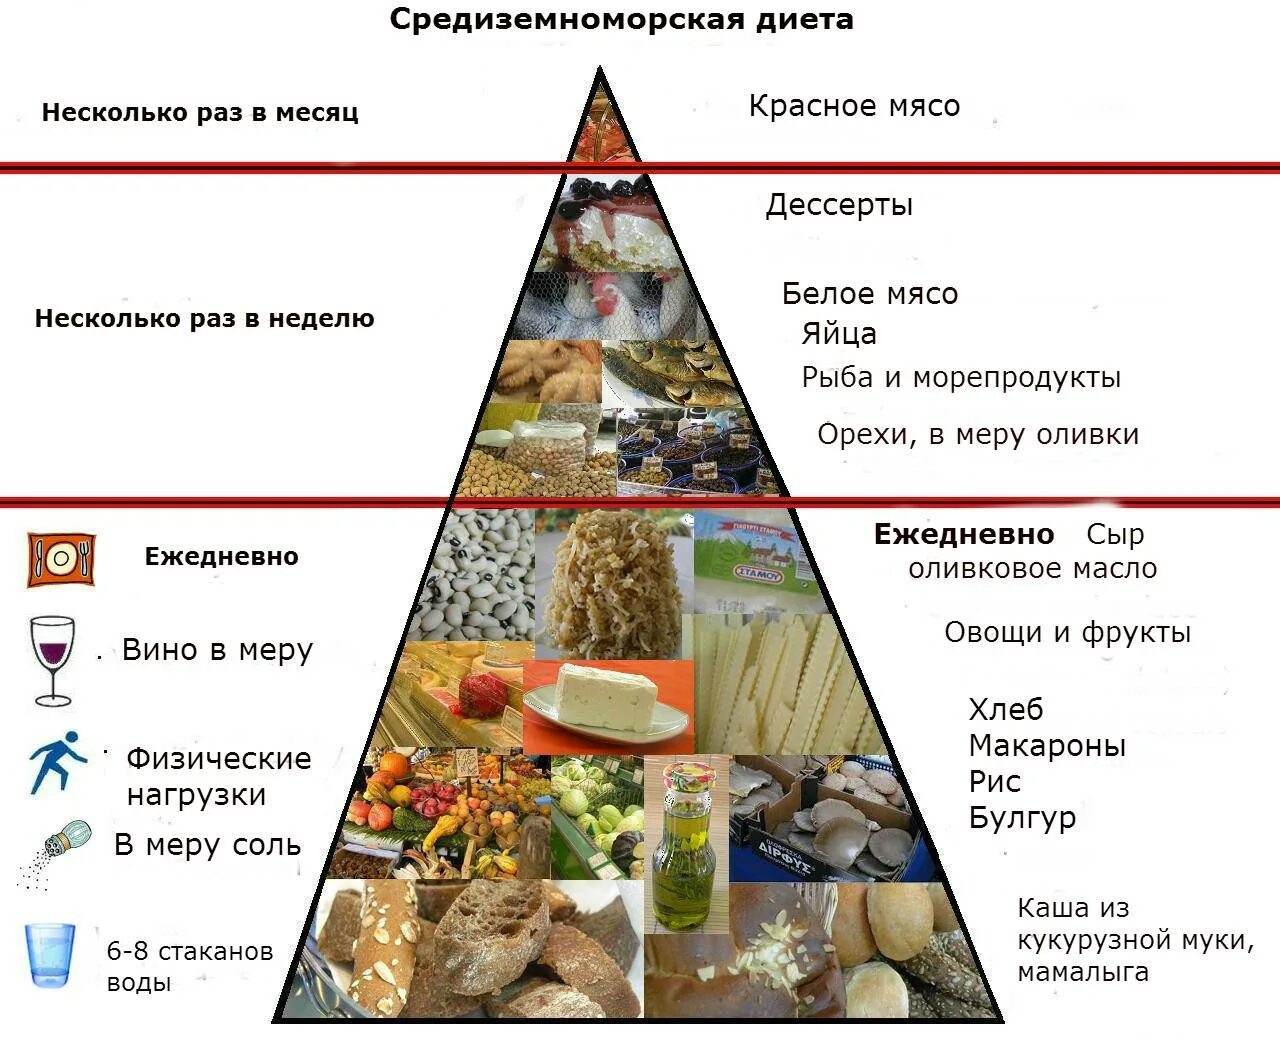 Средиземноморская диета меню на день. Средиземноморская пирамида питания. Пирамида питания по средиземноморской диете. Средиземноморский Тип питания меню. Пирамида питания Средиземноморский Тип.